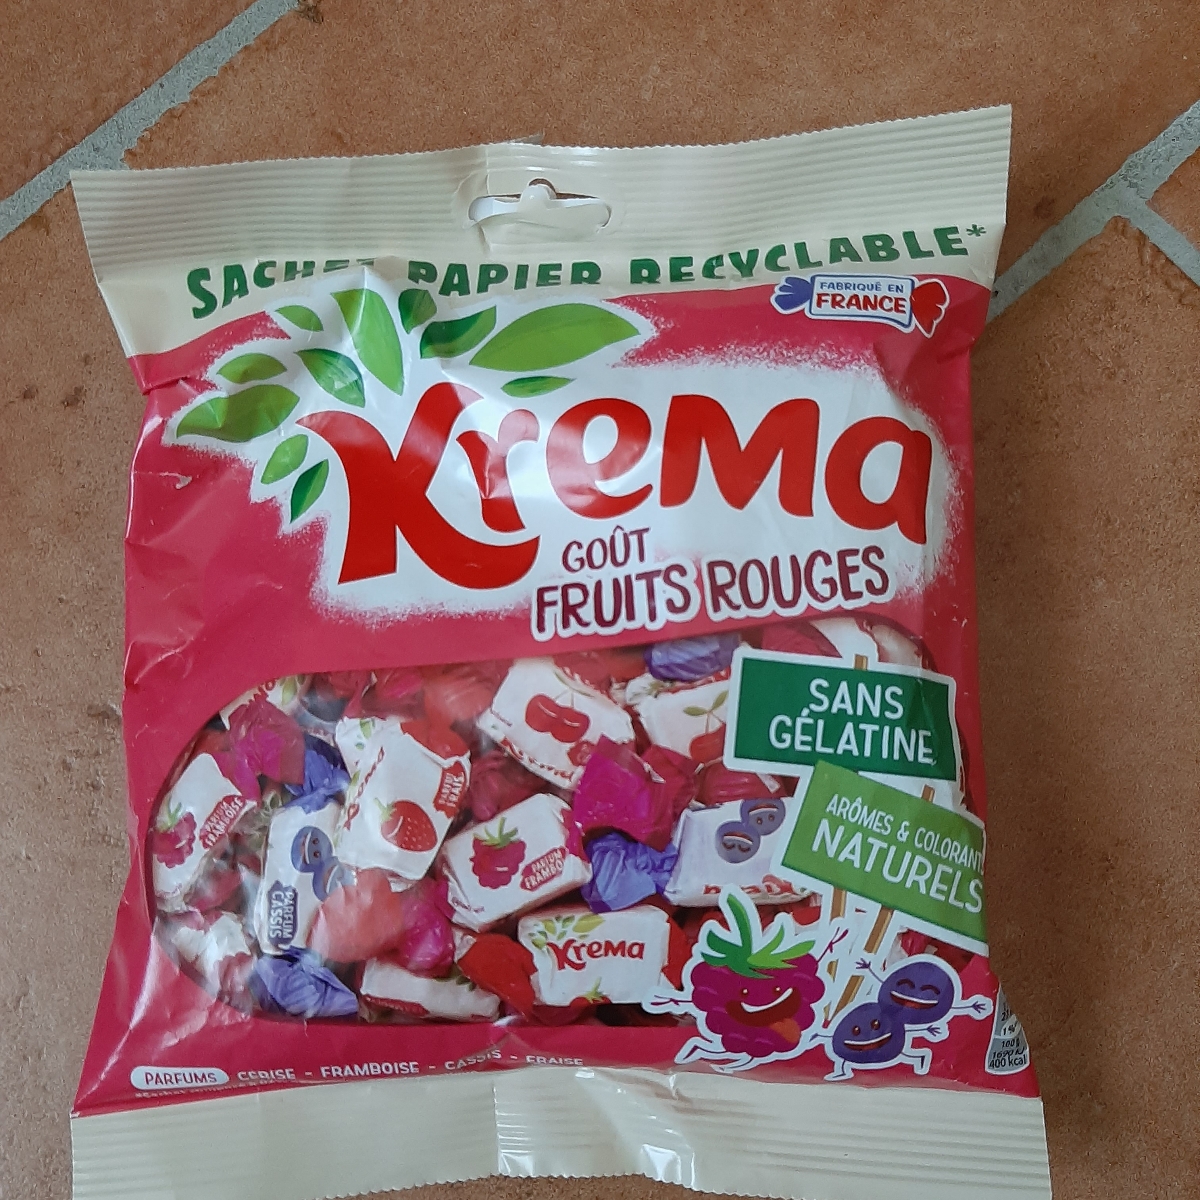 Krema Goût fruits rouges Review